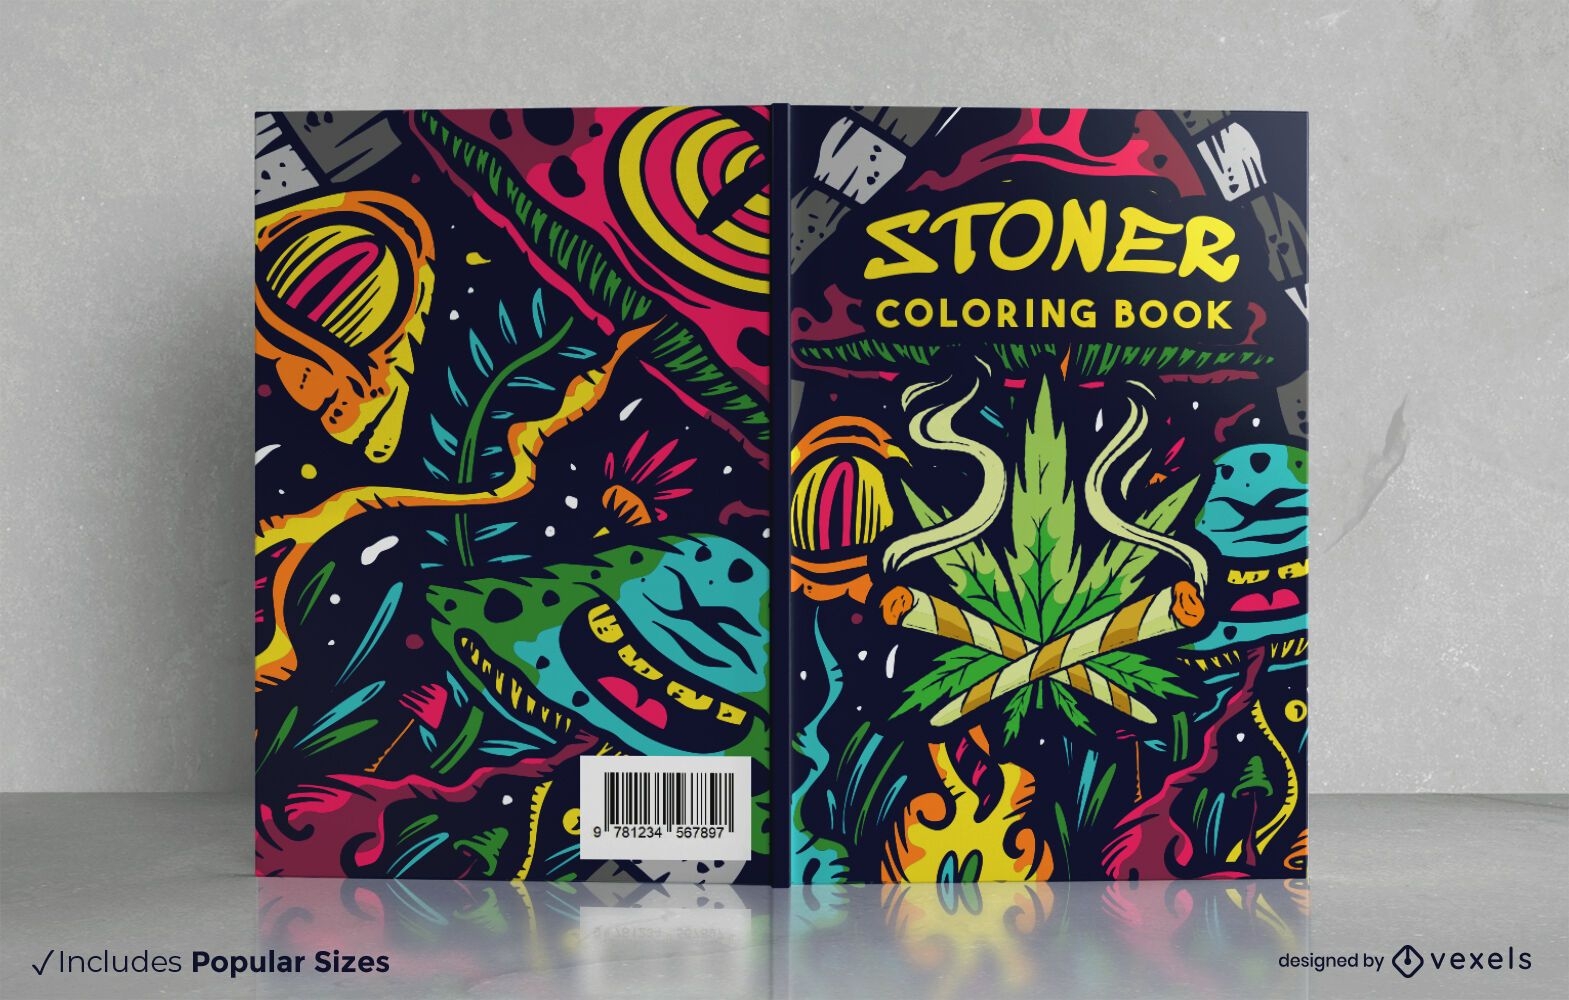 Stoner coloring book cover design